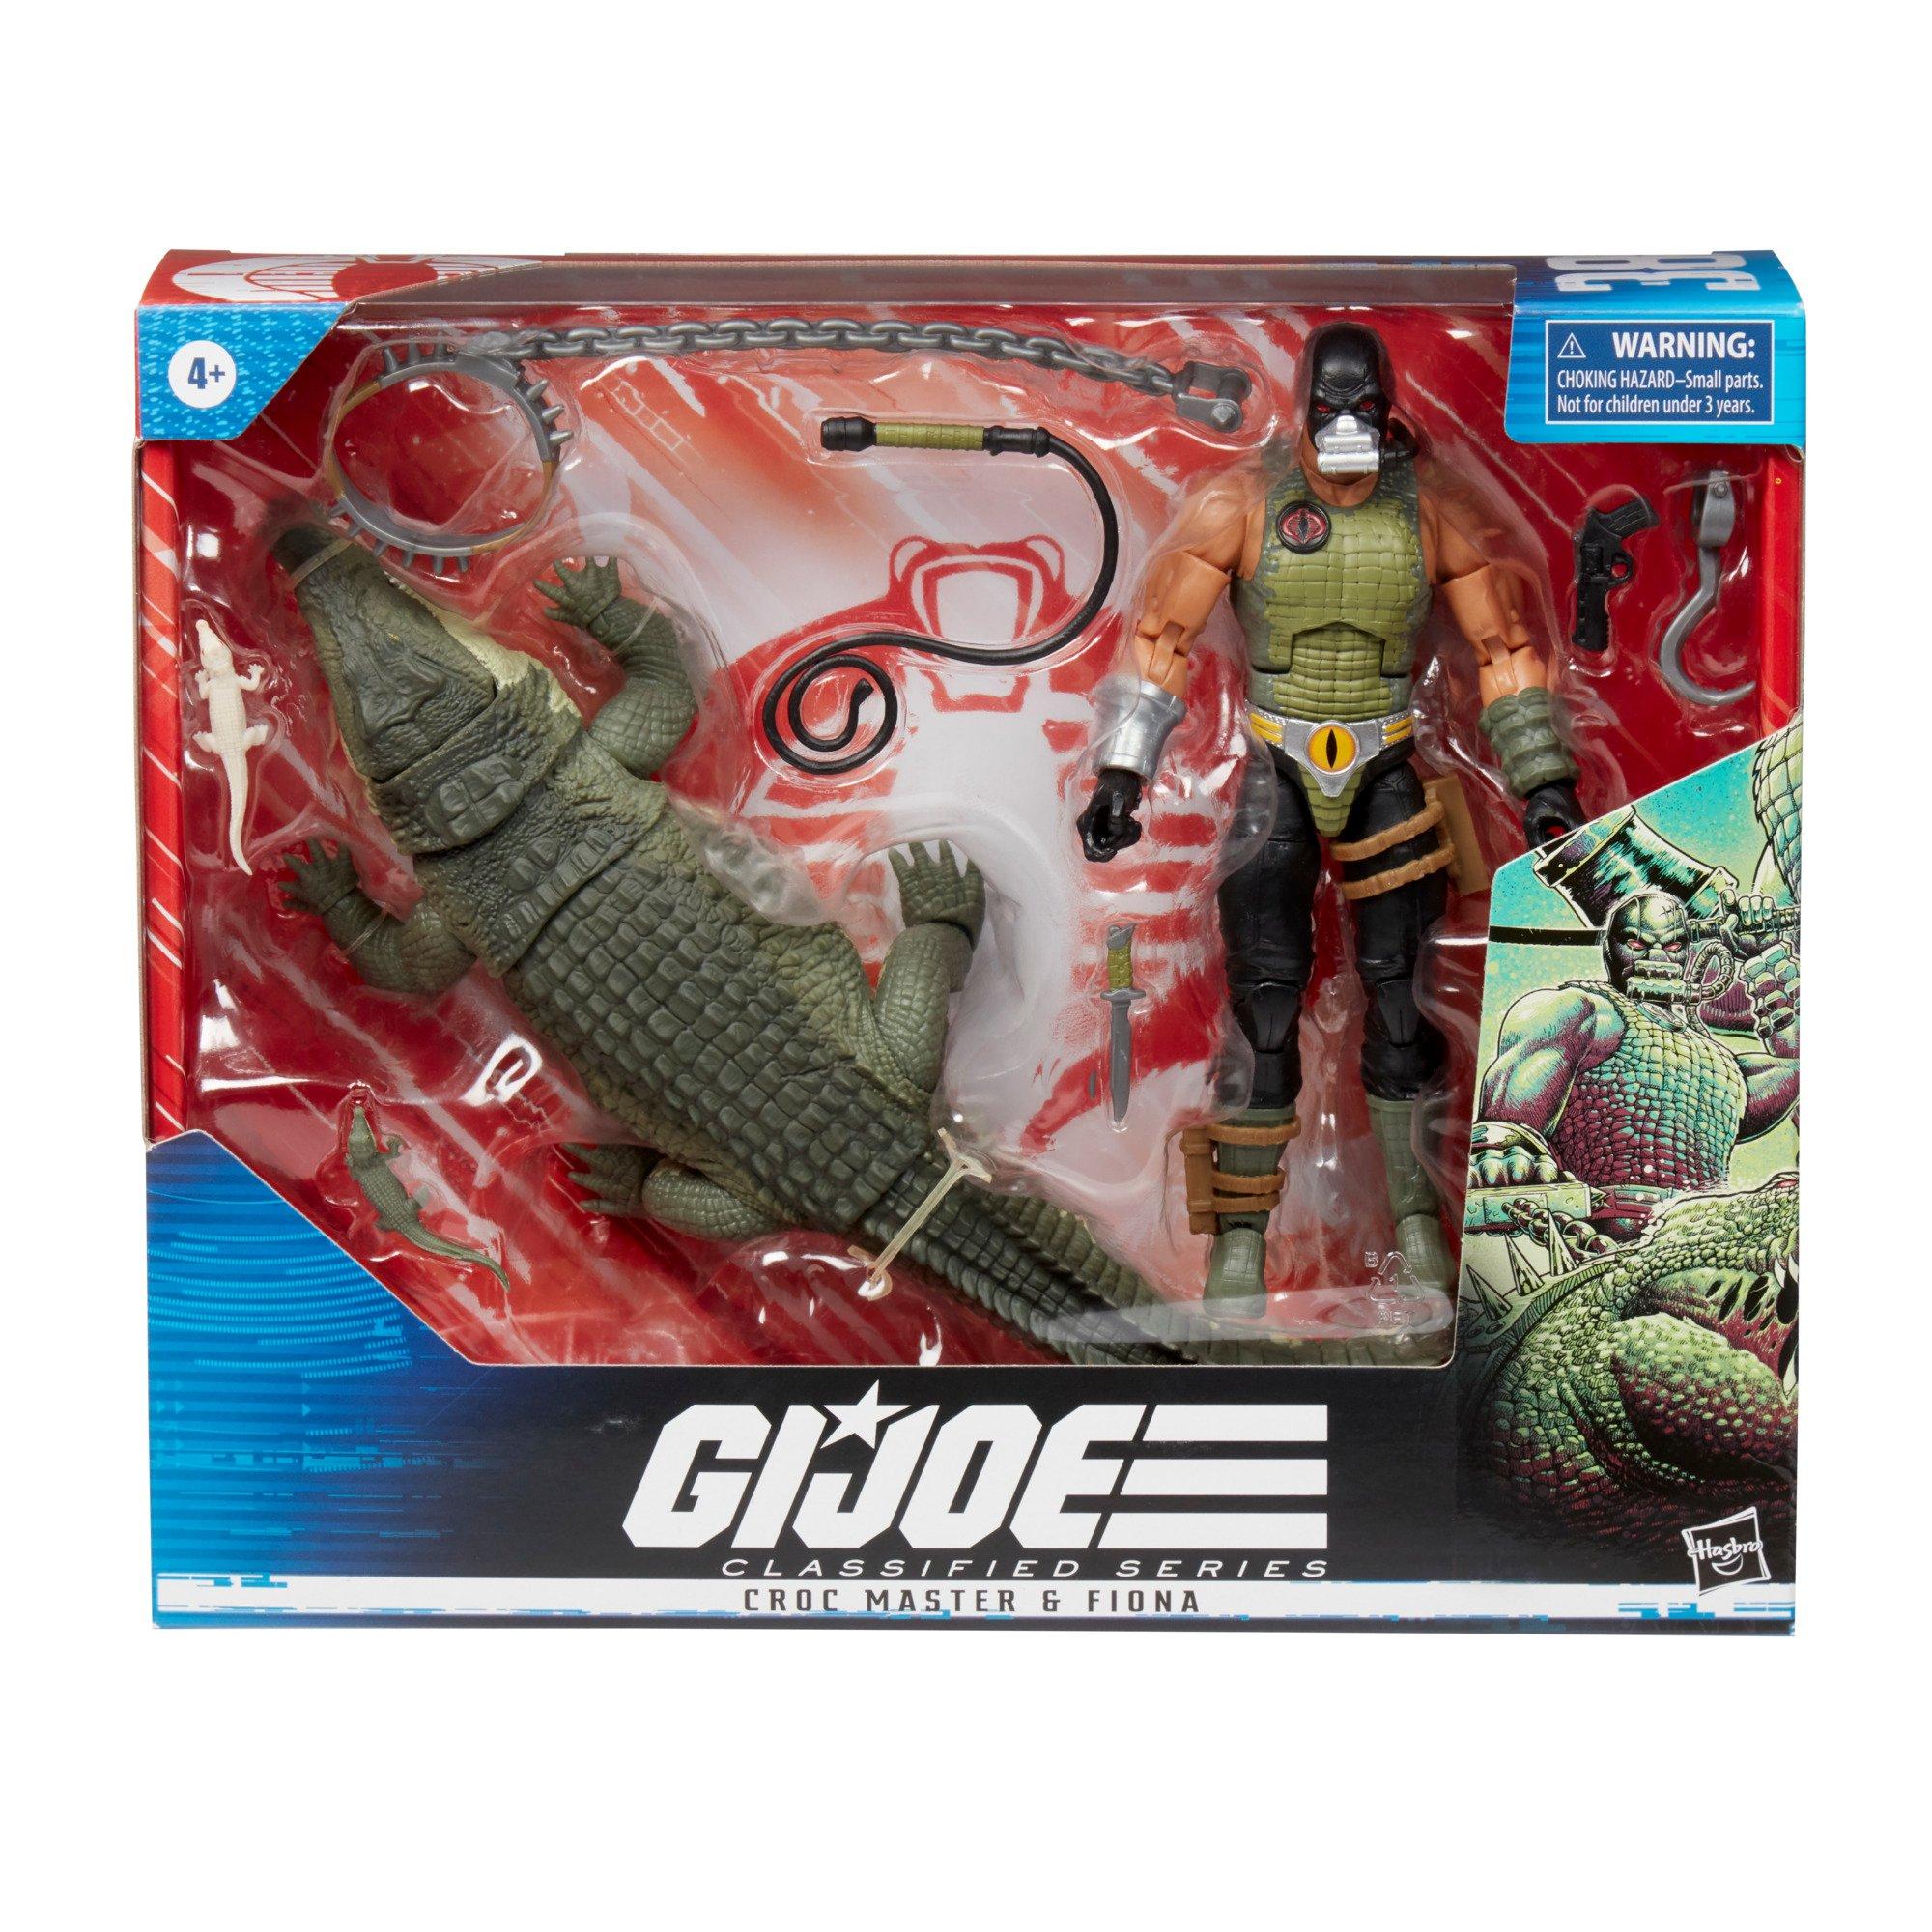 list item 1 of 10 Hasbro G.I. Joe Classified Series Croc Master and Fiona Action Figure Set